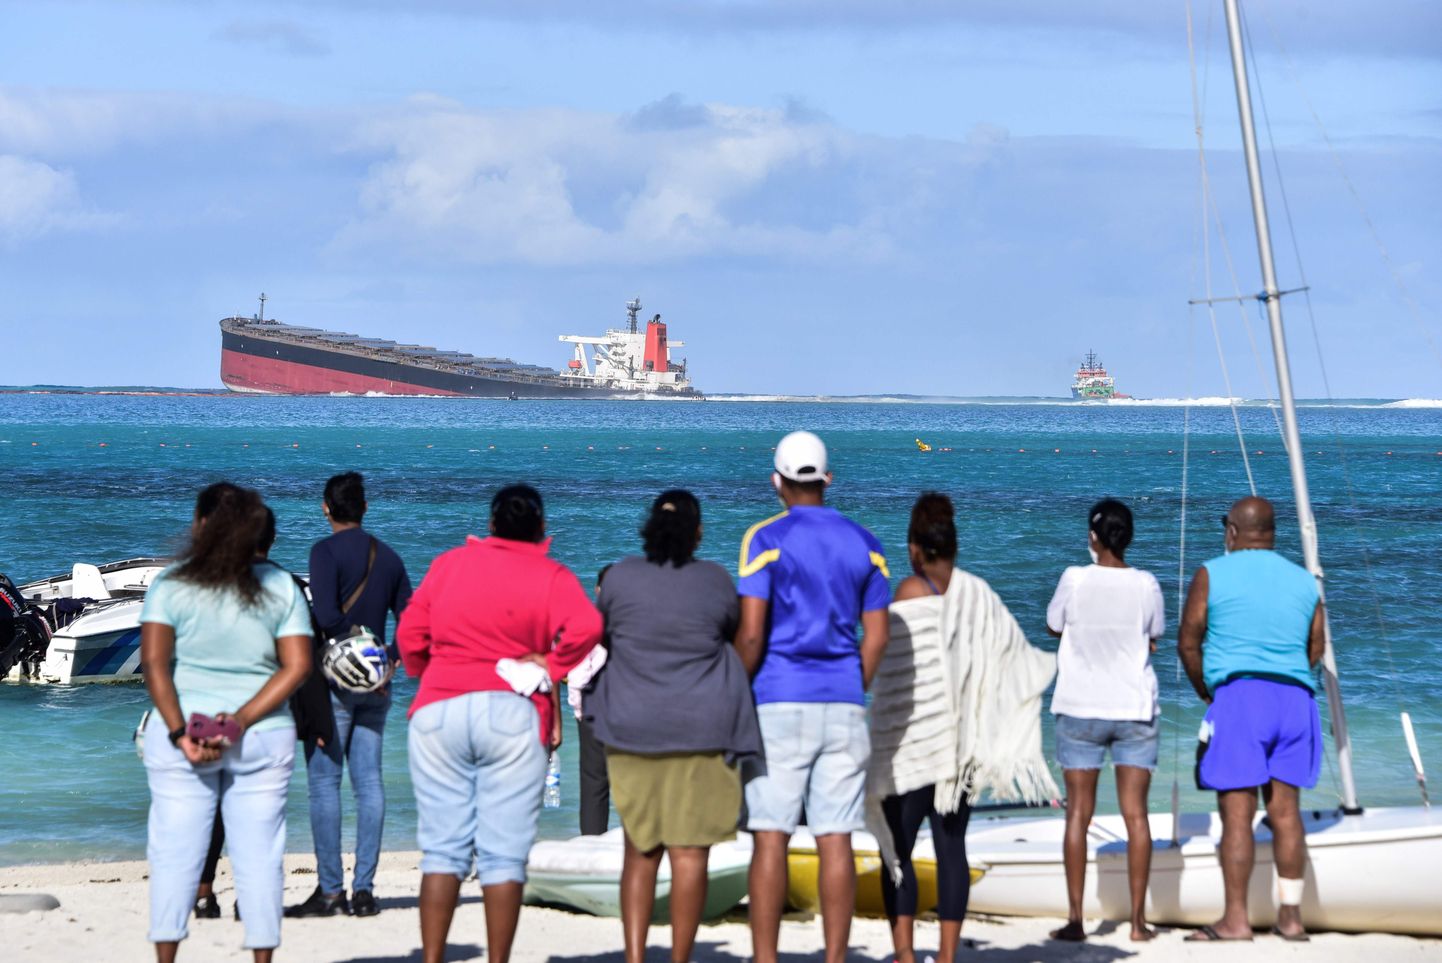 Фото с места событий. Маврикий, разлив нефти с сухогруза.